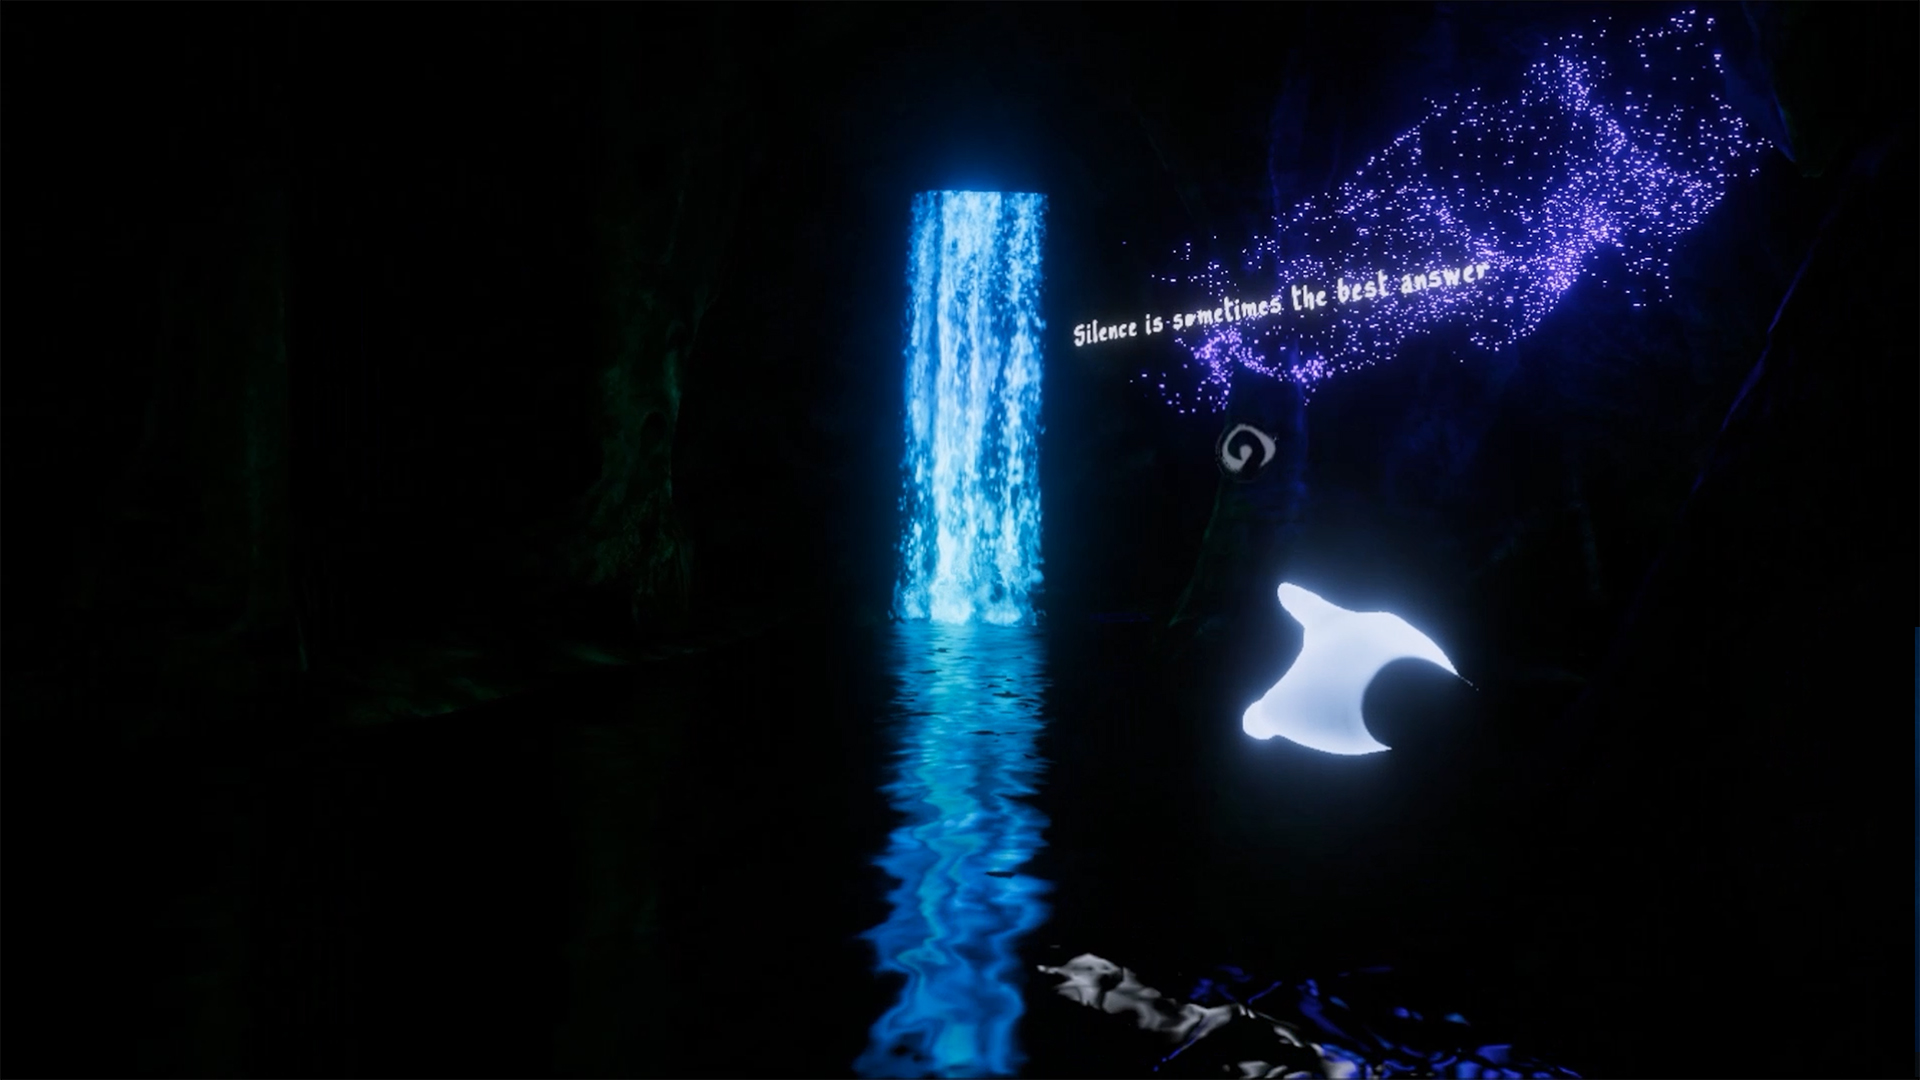 Mind Labyrinth VR Dreams Free Download